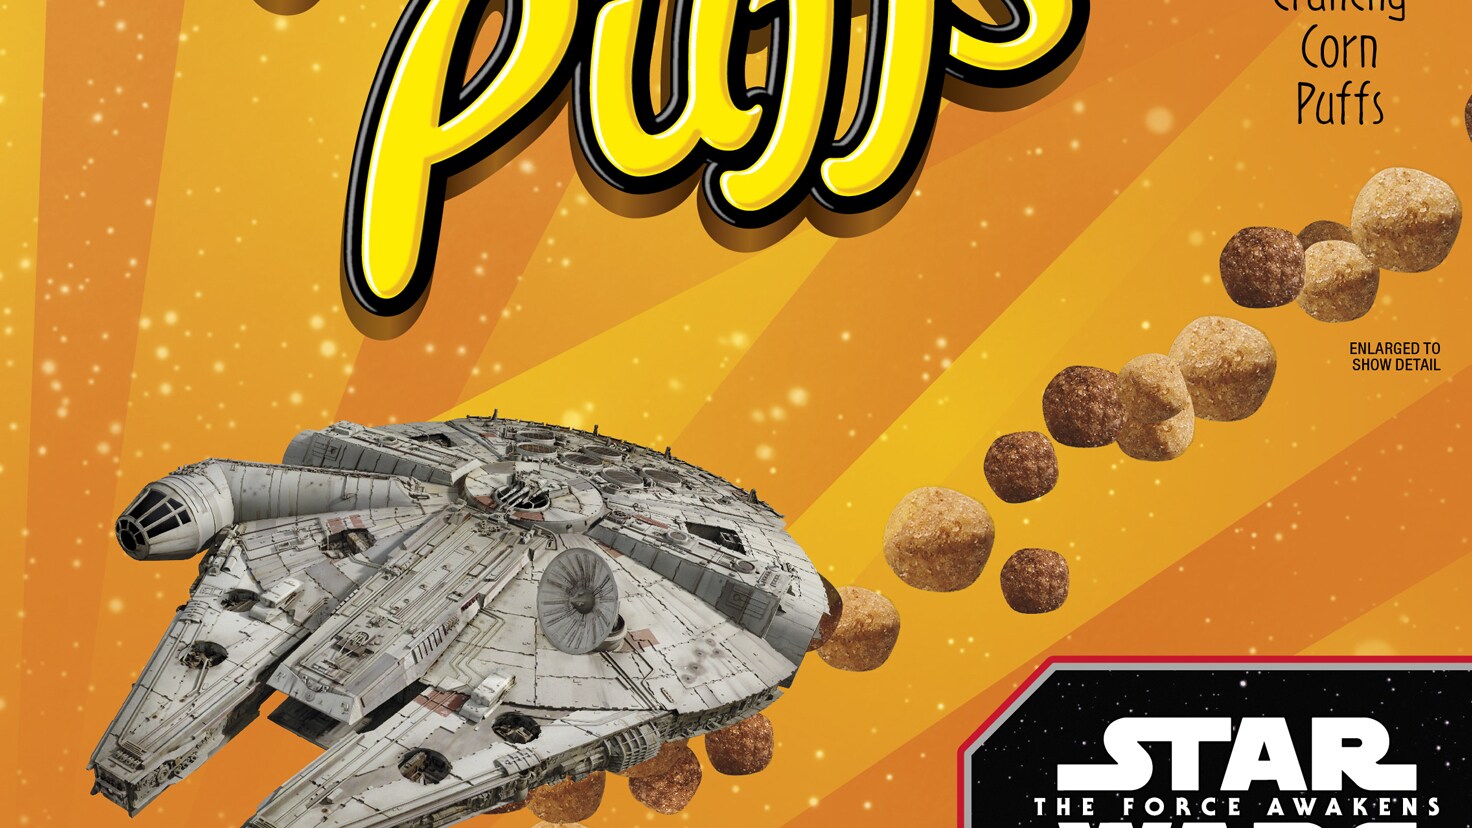 Star Wars Reese's Puffs